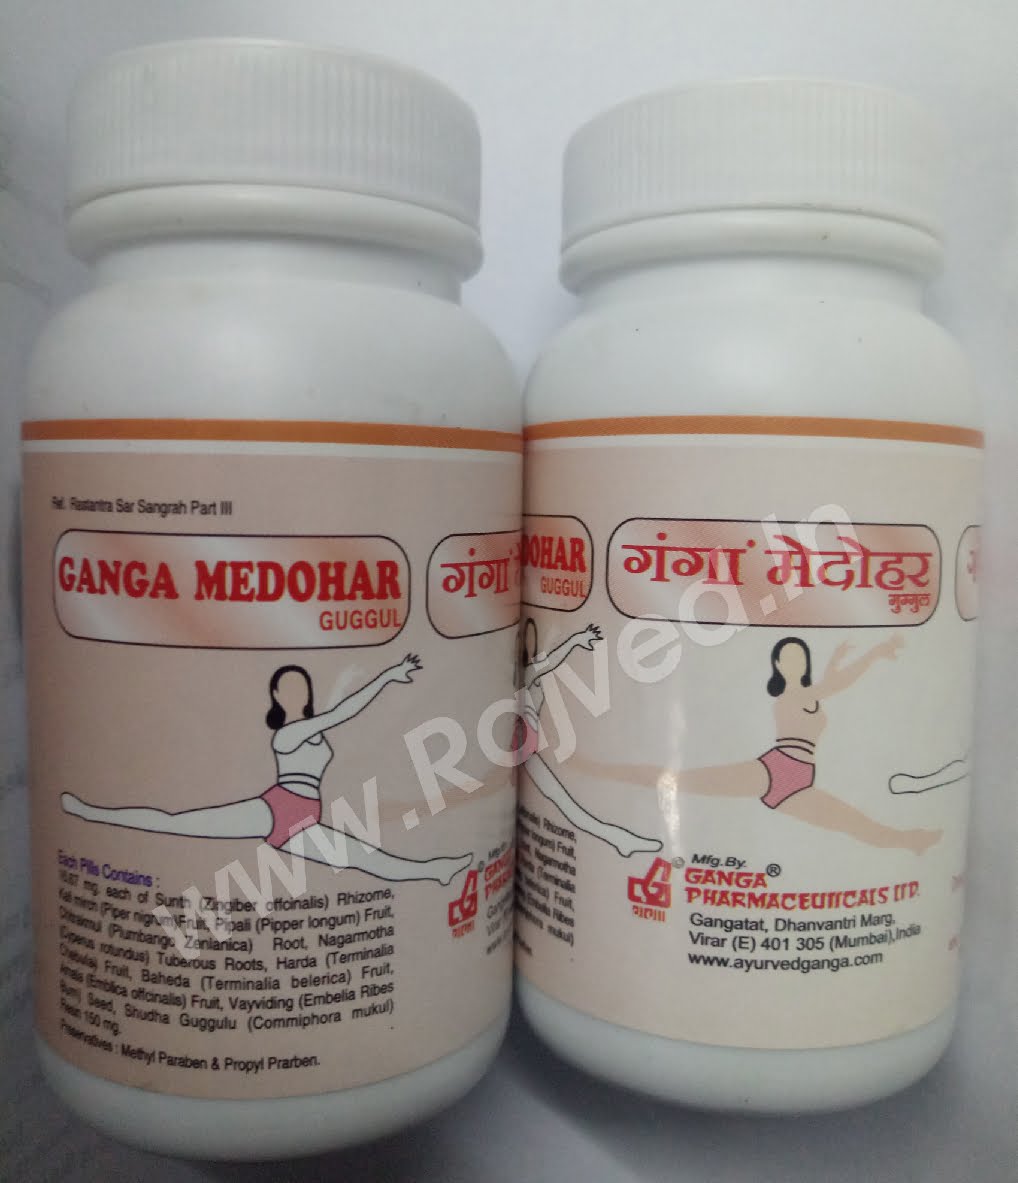 medohar guggul 500 gm upto 20% off free shipping ganga pharmaceuticals